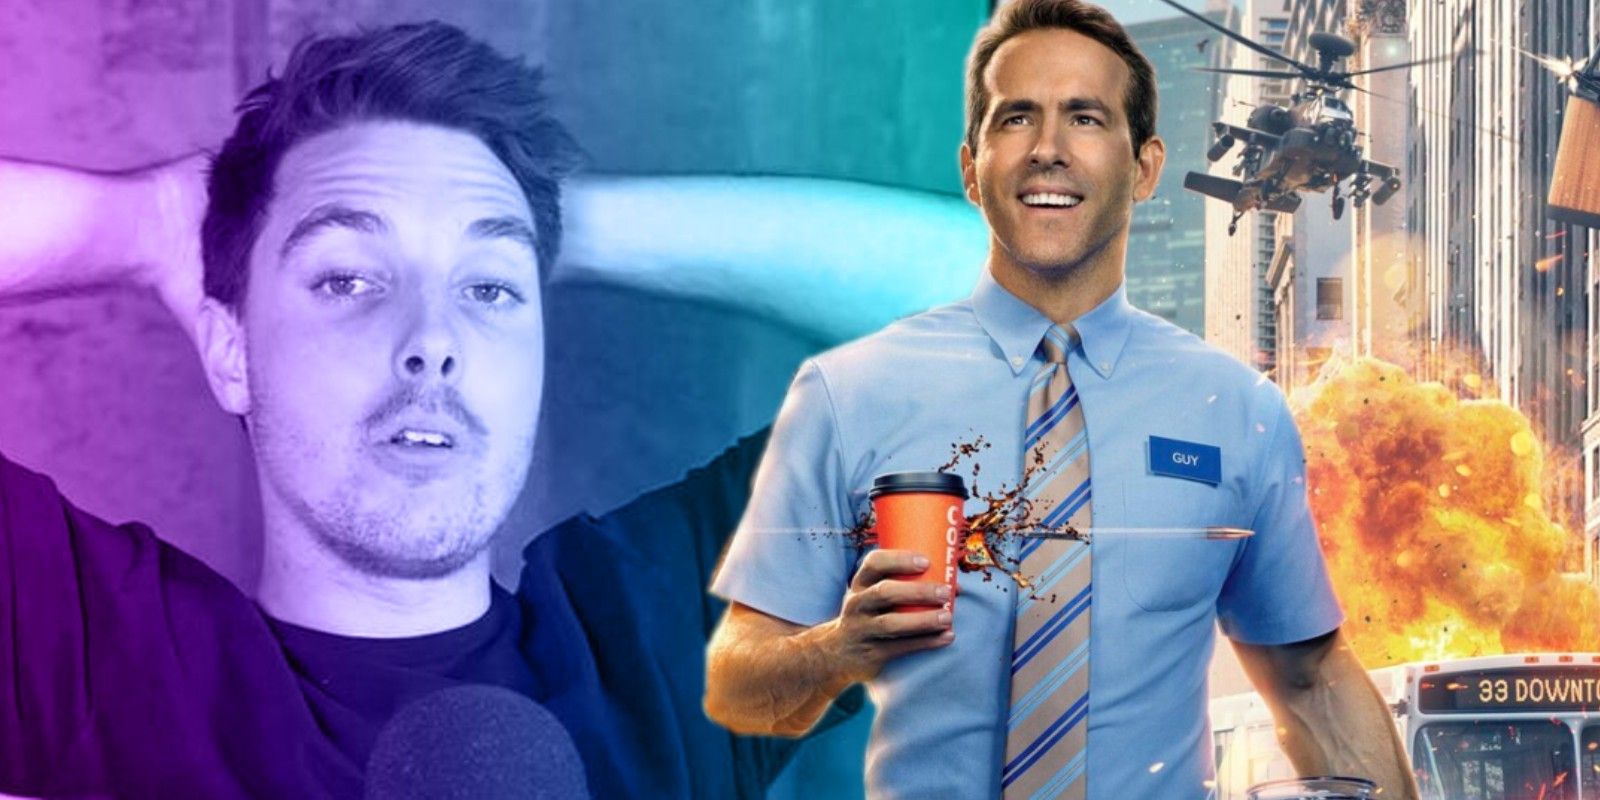 Free Guy: Ninja and Pokimane Explain How the Streamers Got Involved in Ryan  Reynolds' Movie